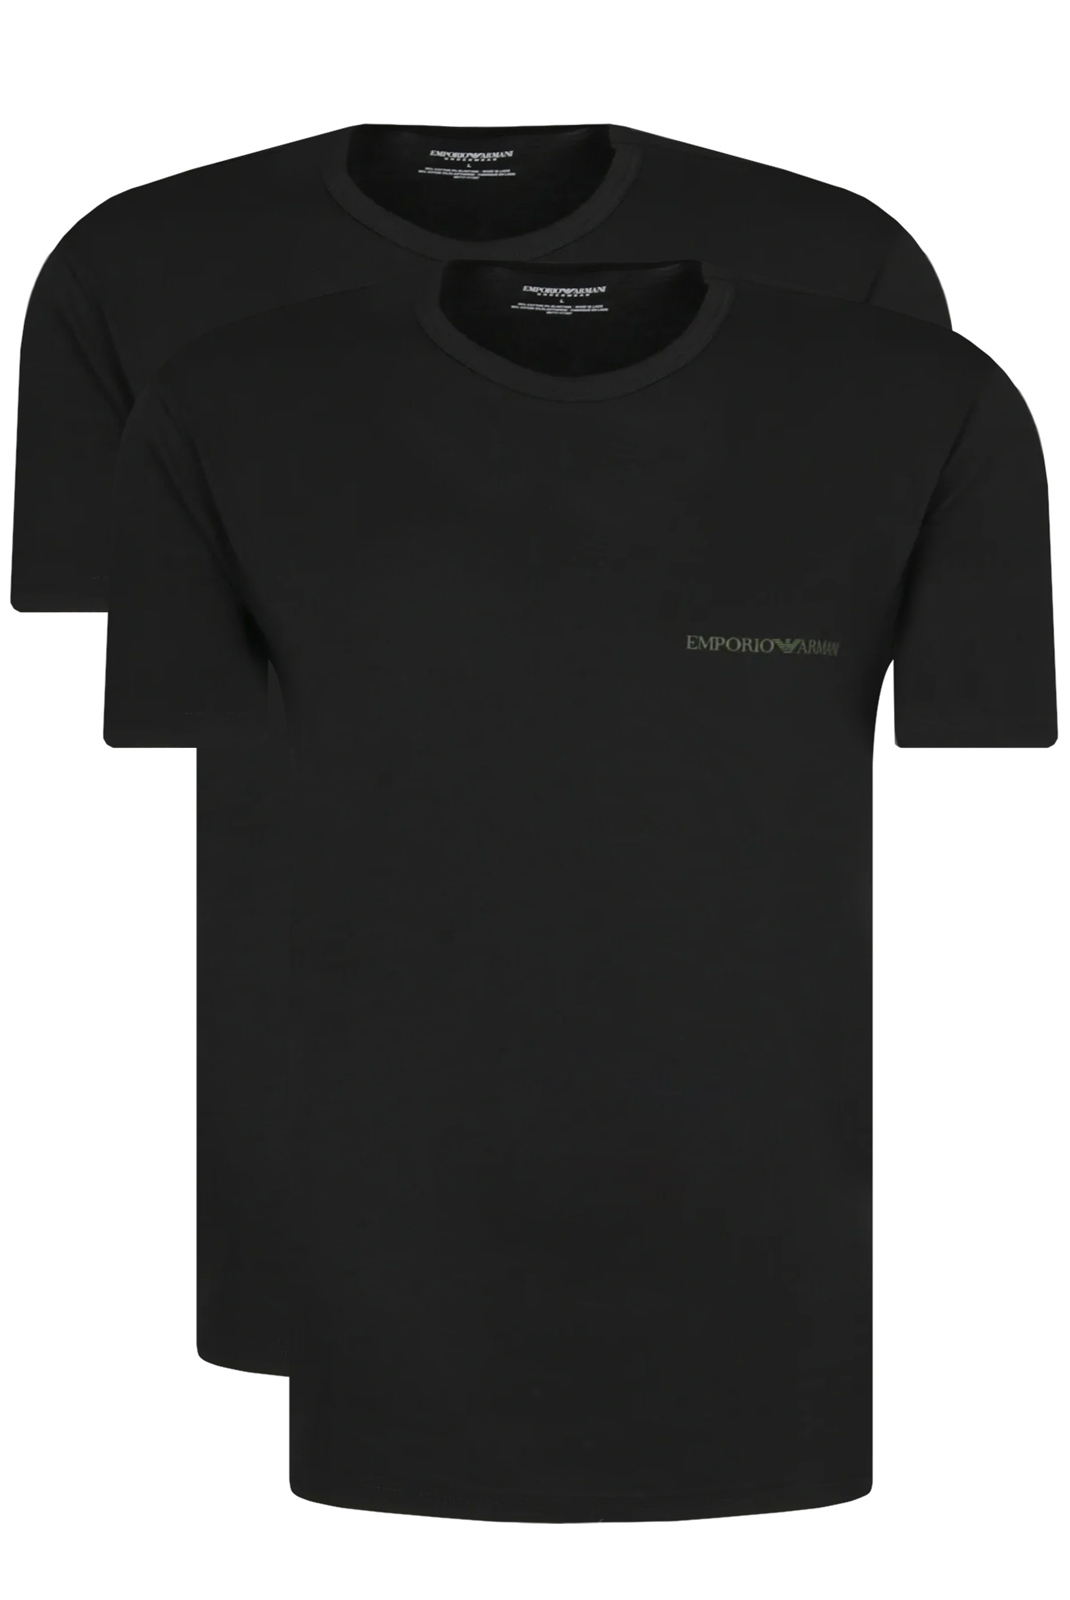 Emporio Armani Pack De 2 Tee-shirt  Noir Uni Col Rond 111267 0a717